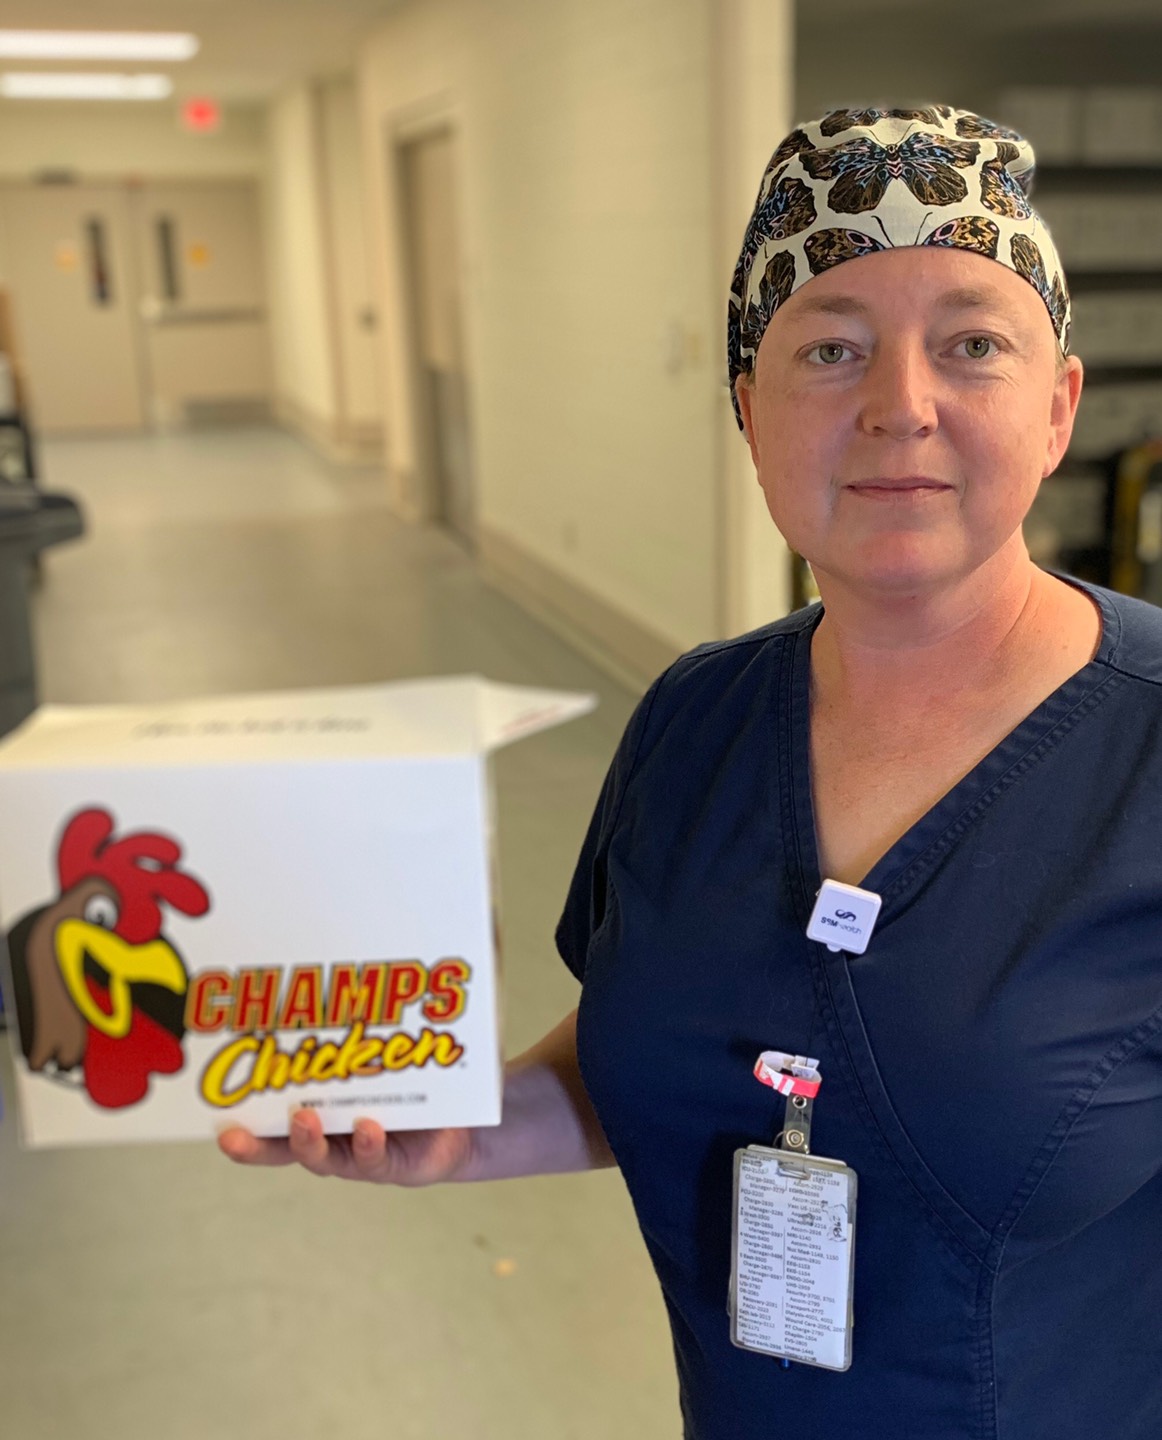 Champs Chicken National Nurses Month.jpg 3